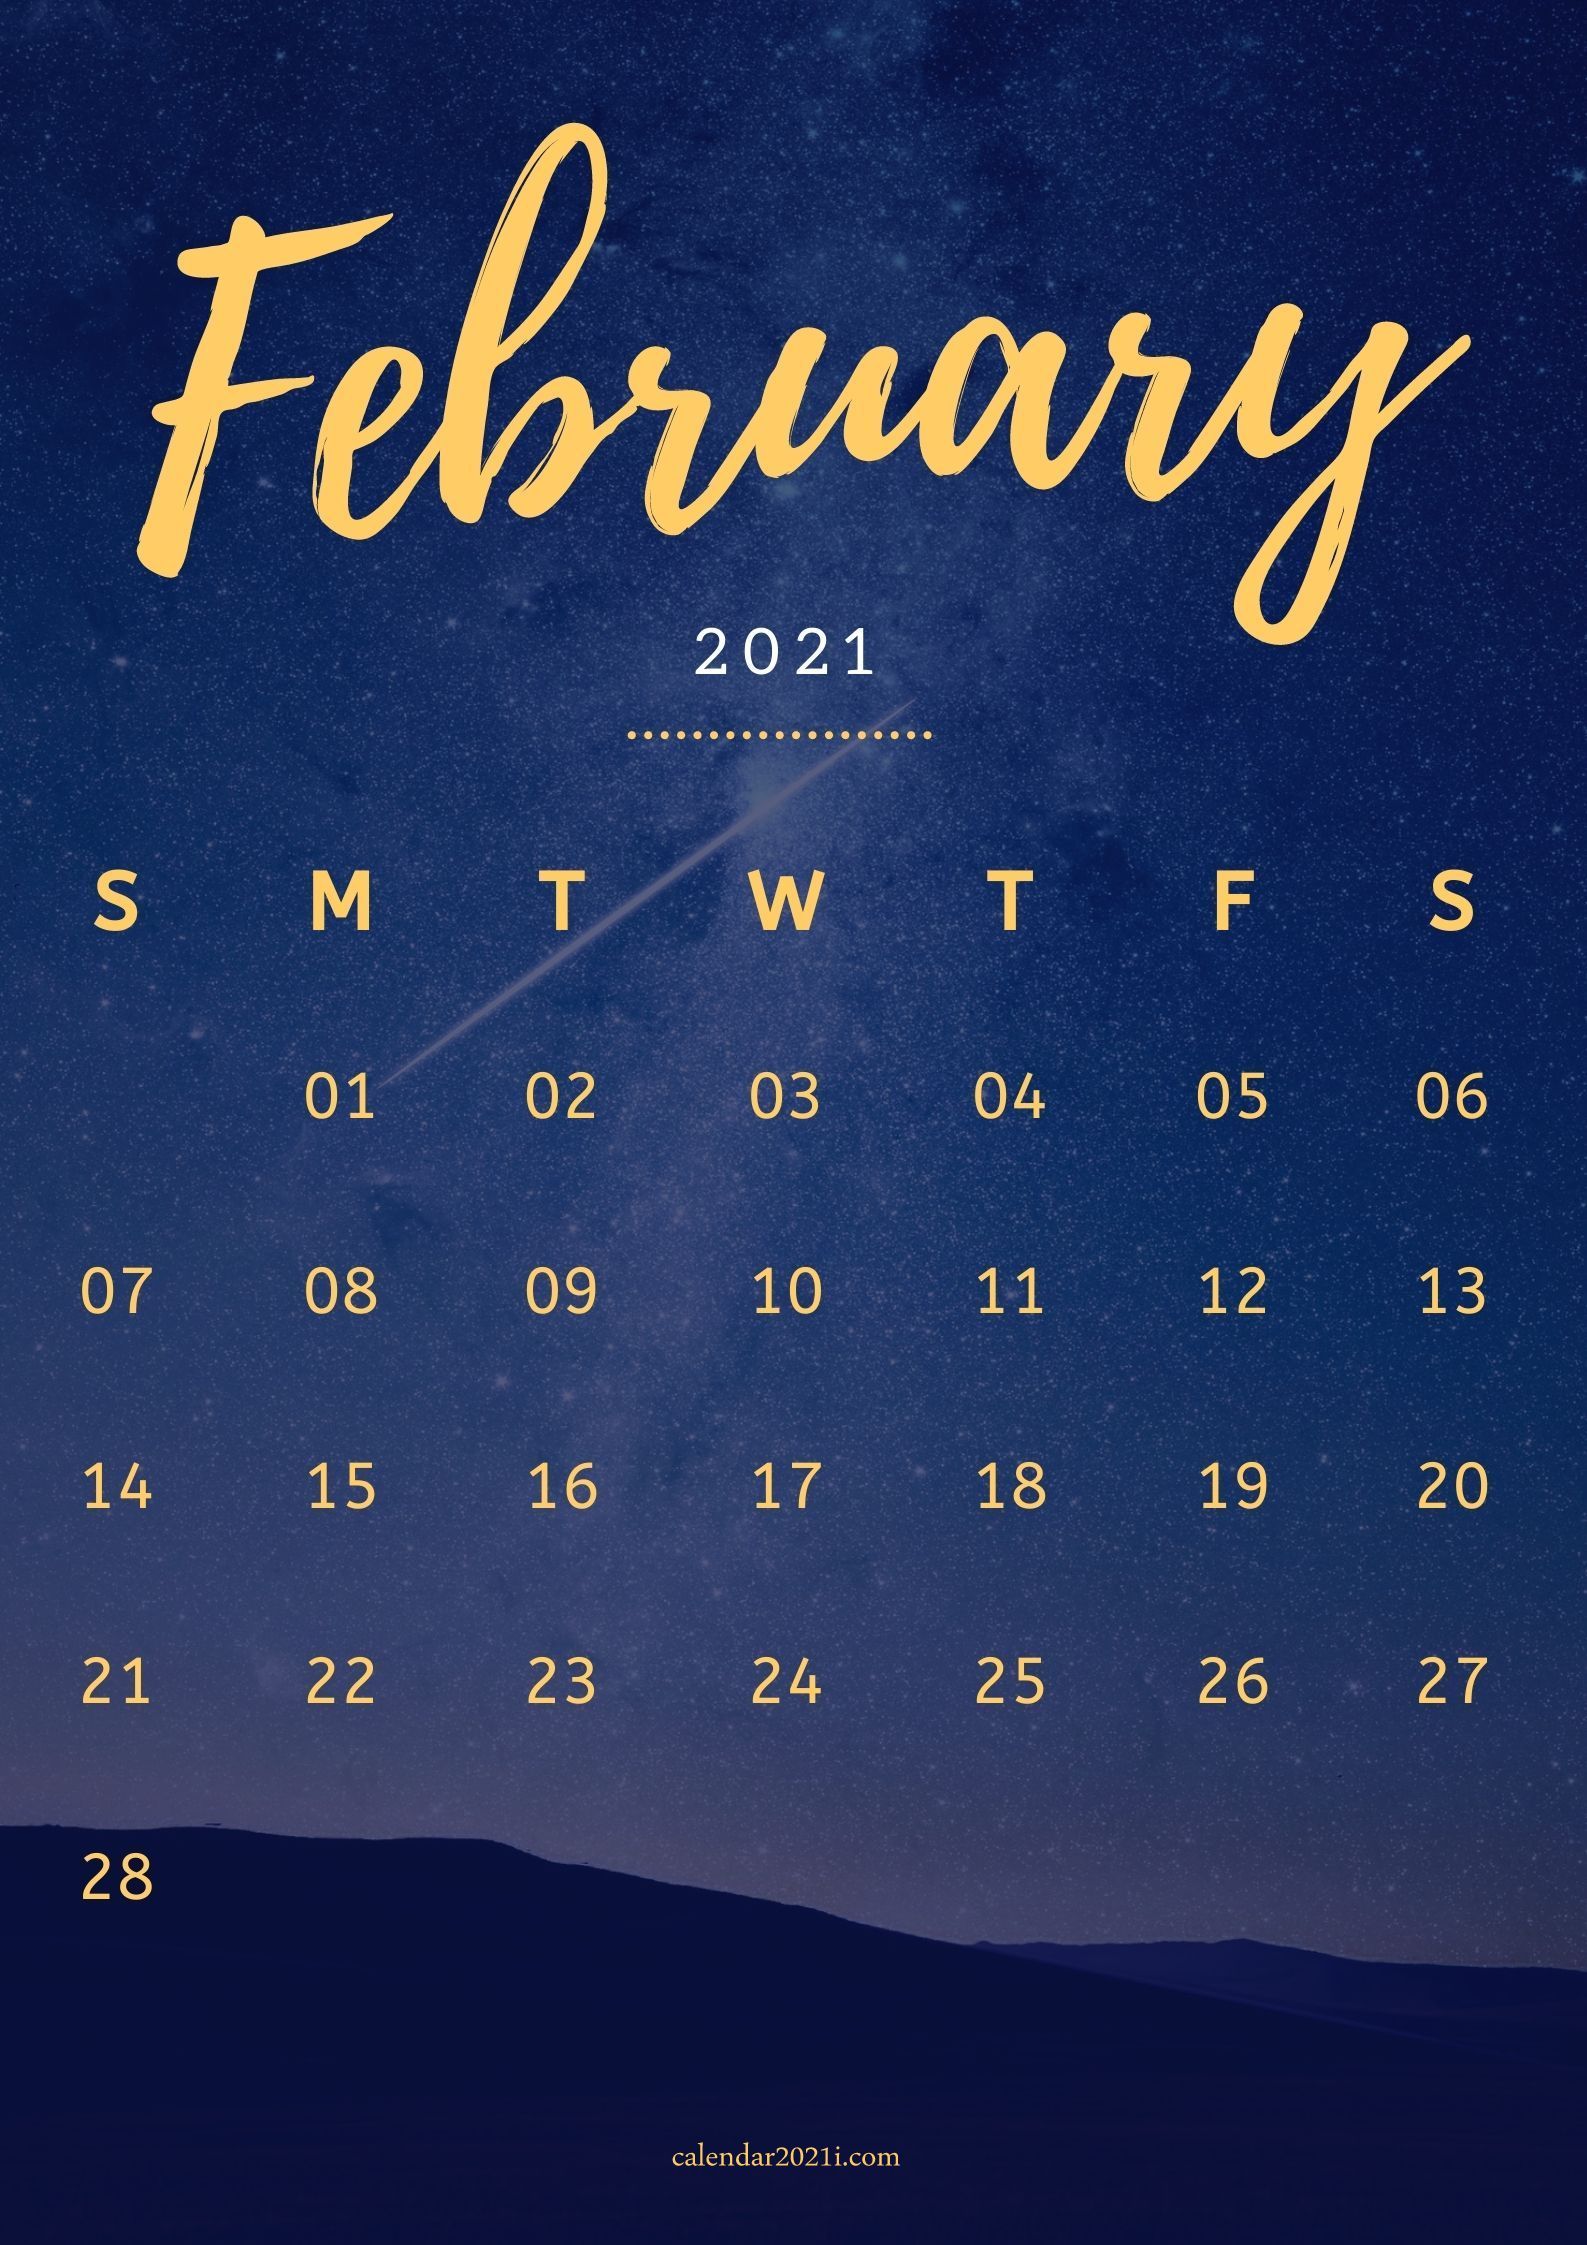 iPhone February 2021 Calendar Wallpaper Free Download